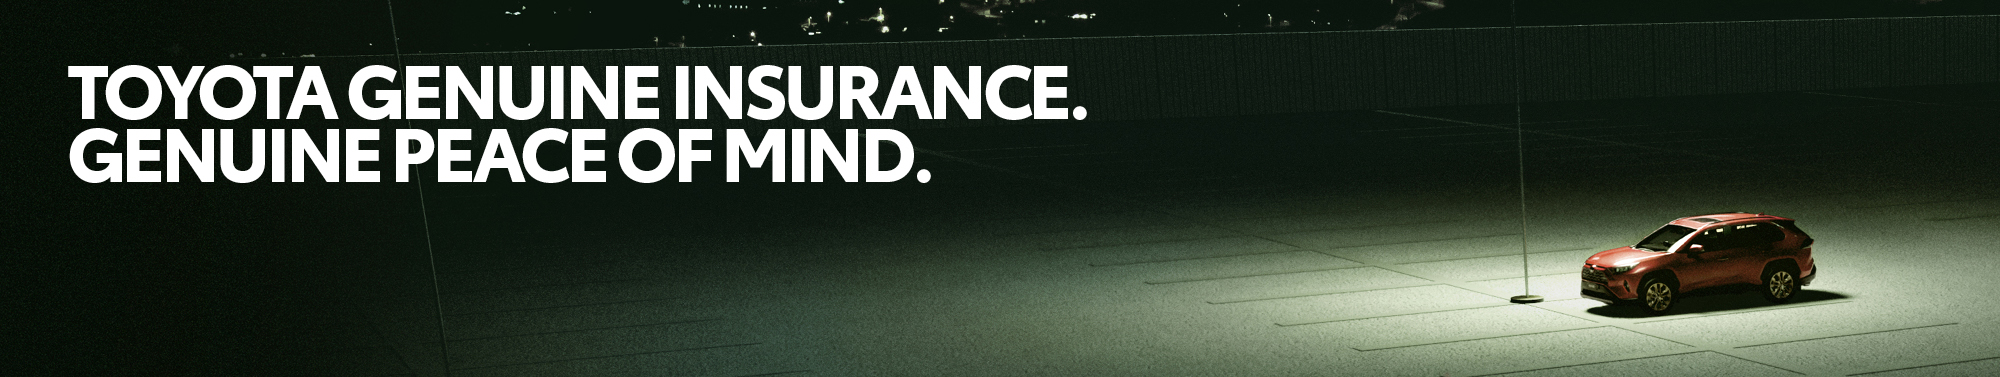 Toyota Genuine Insurance